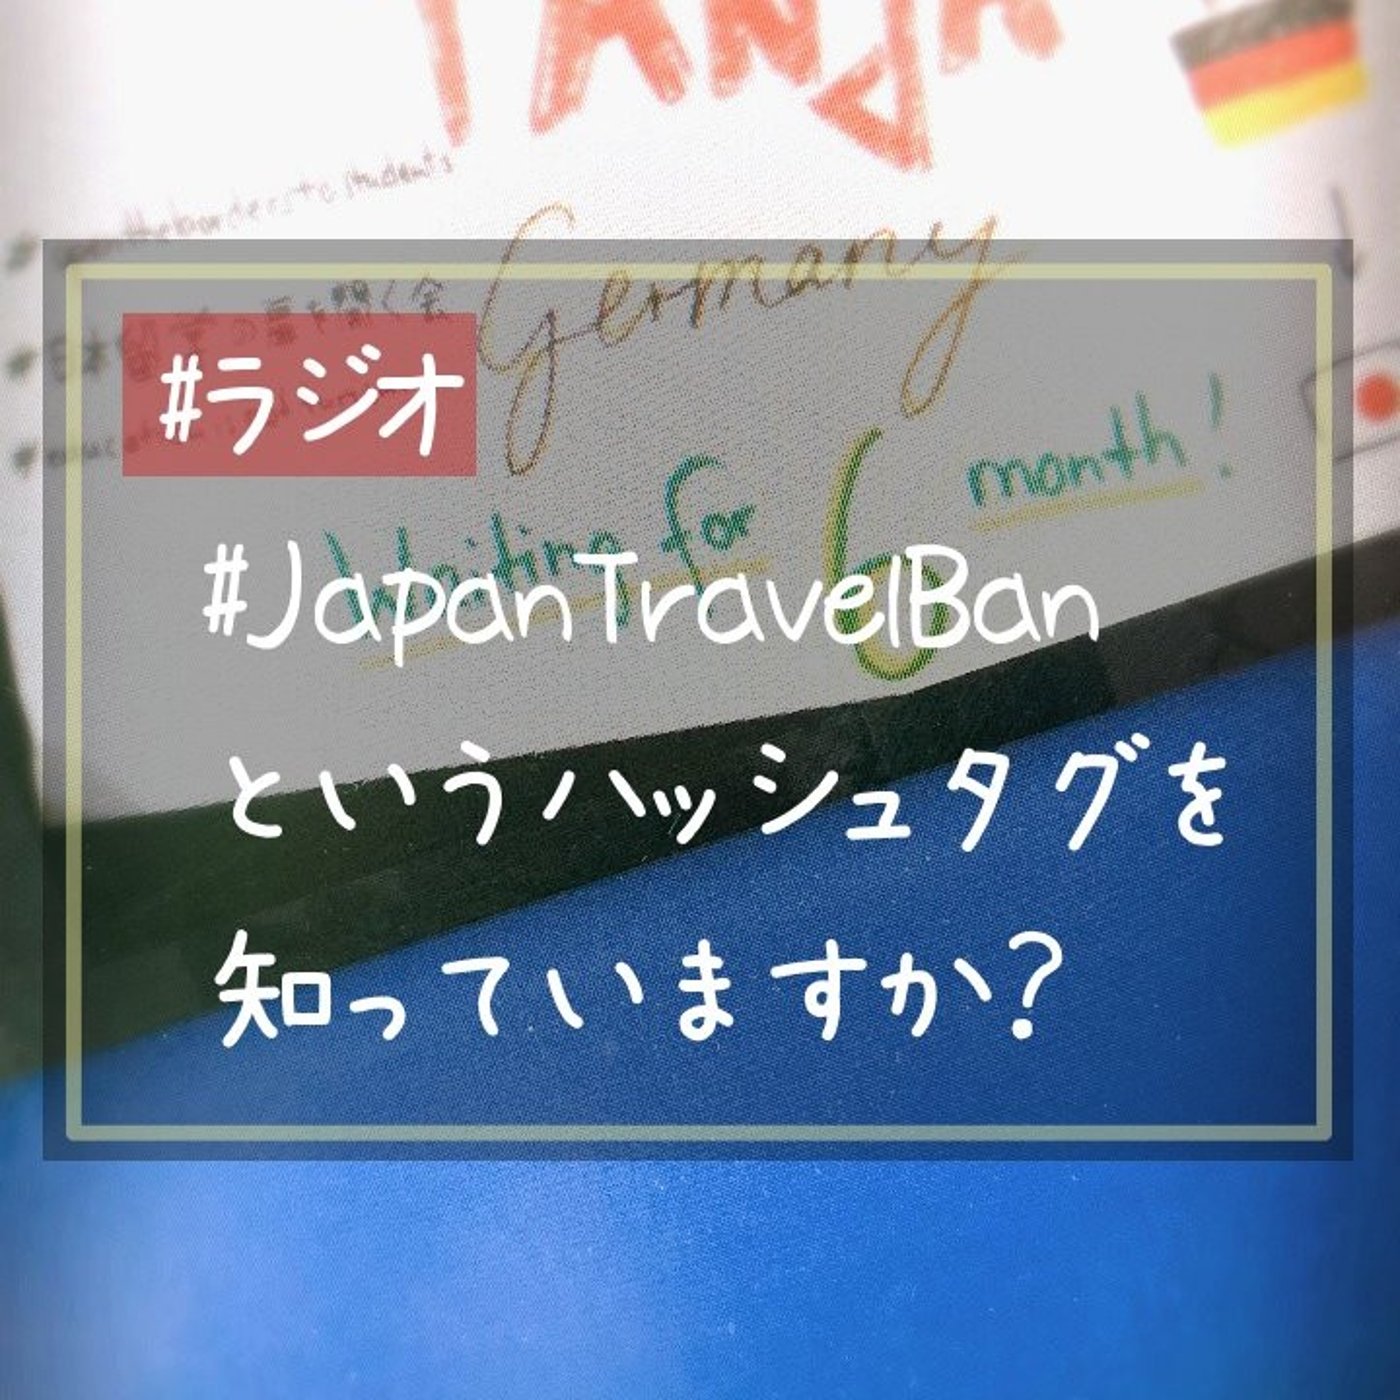 #JapanTravelBan というハッシュタグを知ってますか？